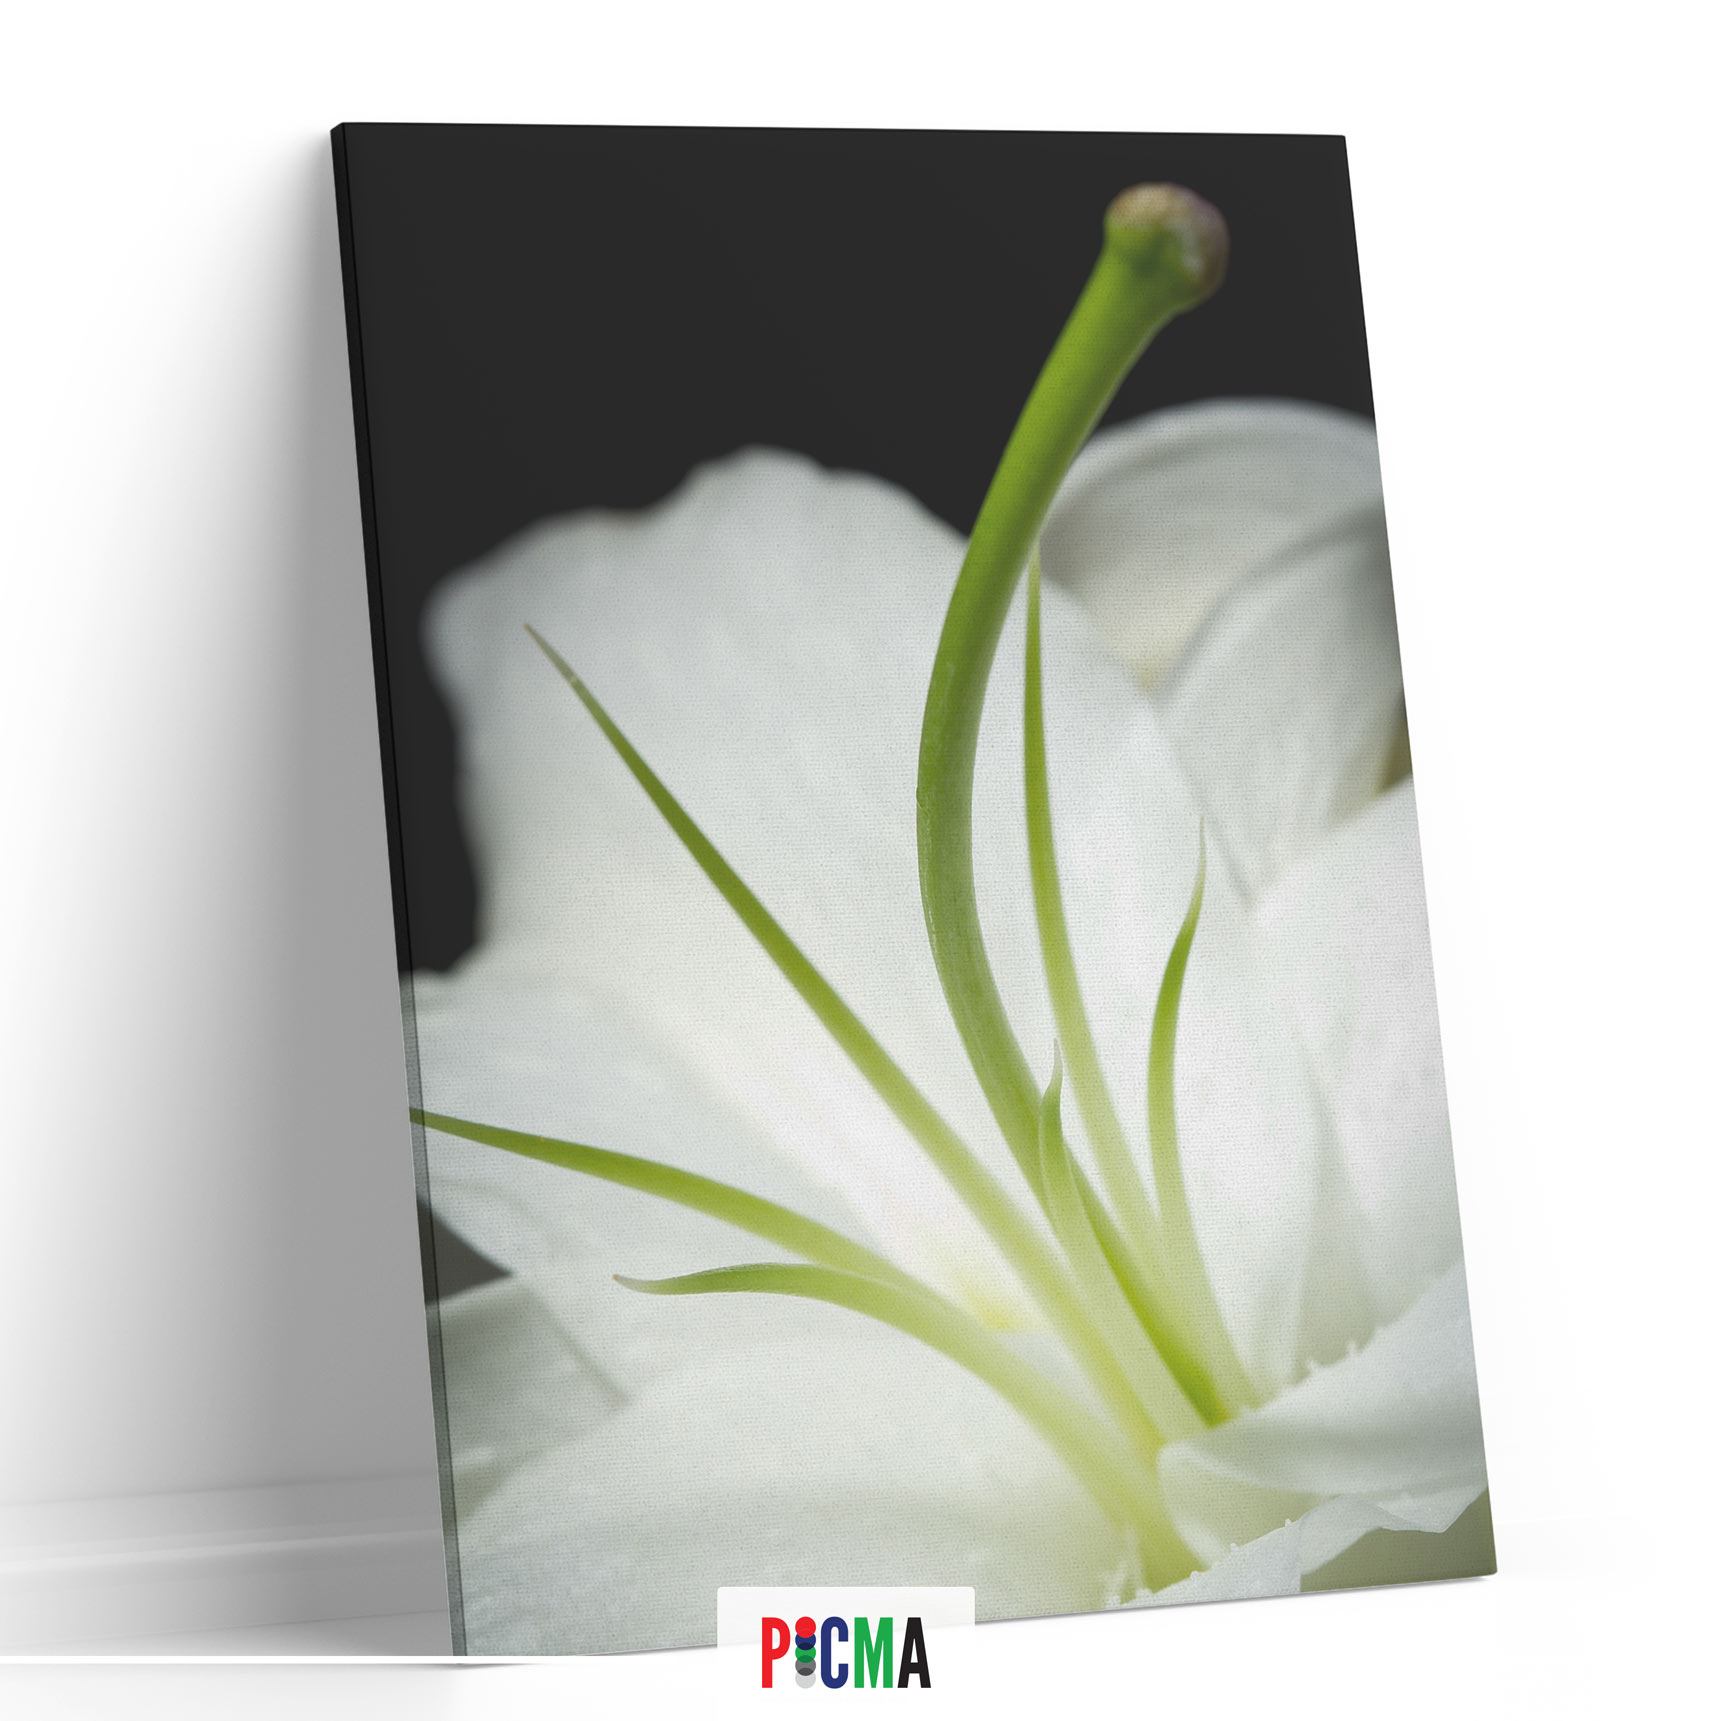 Tablou canvas luminos Floare alba 2, Picma, dualview, panza + sasiu lemn, 80 x 120 cm